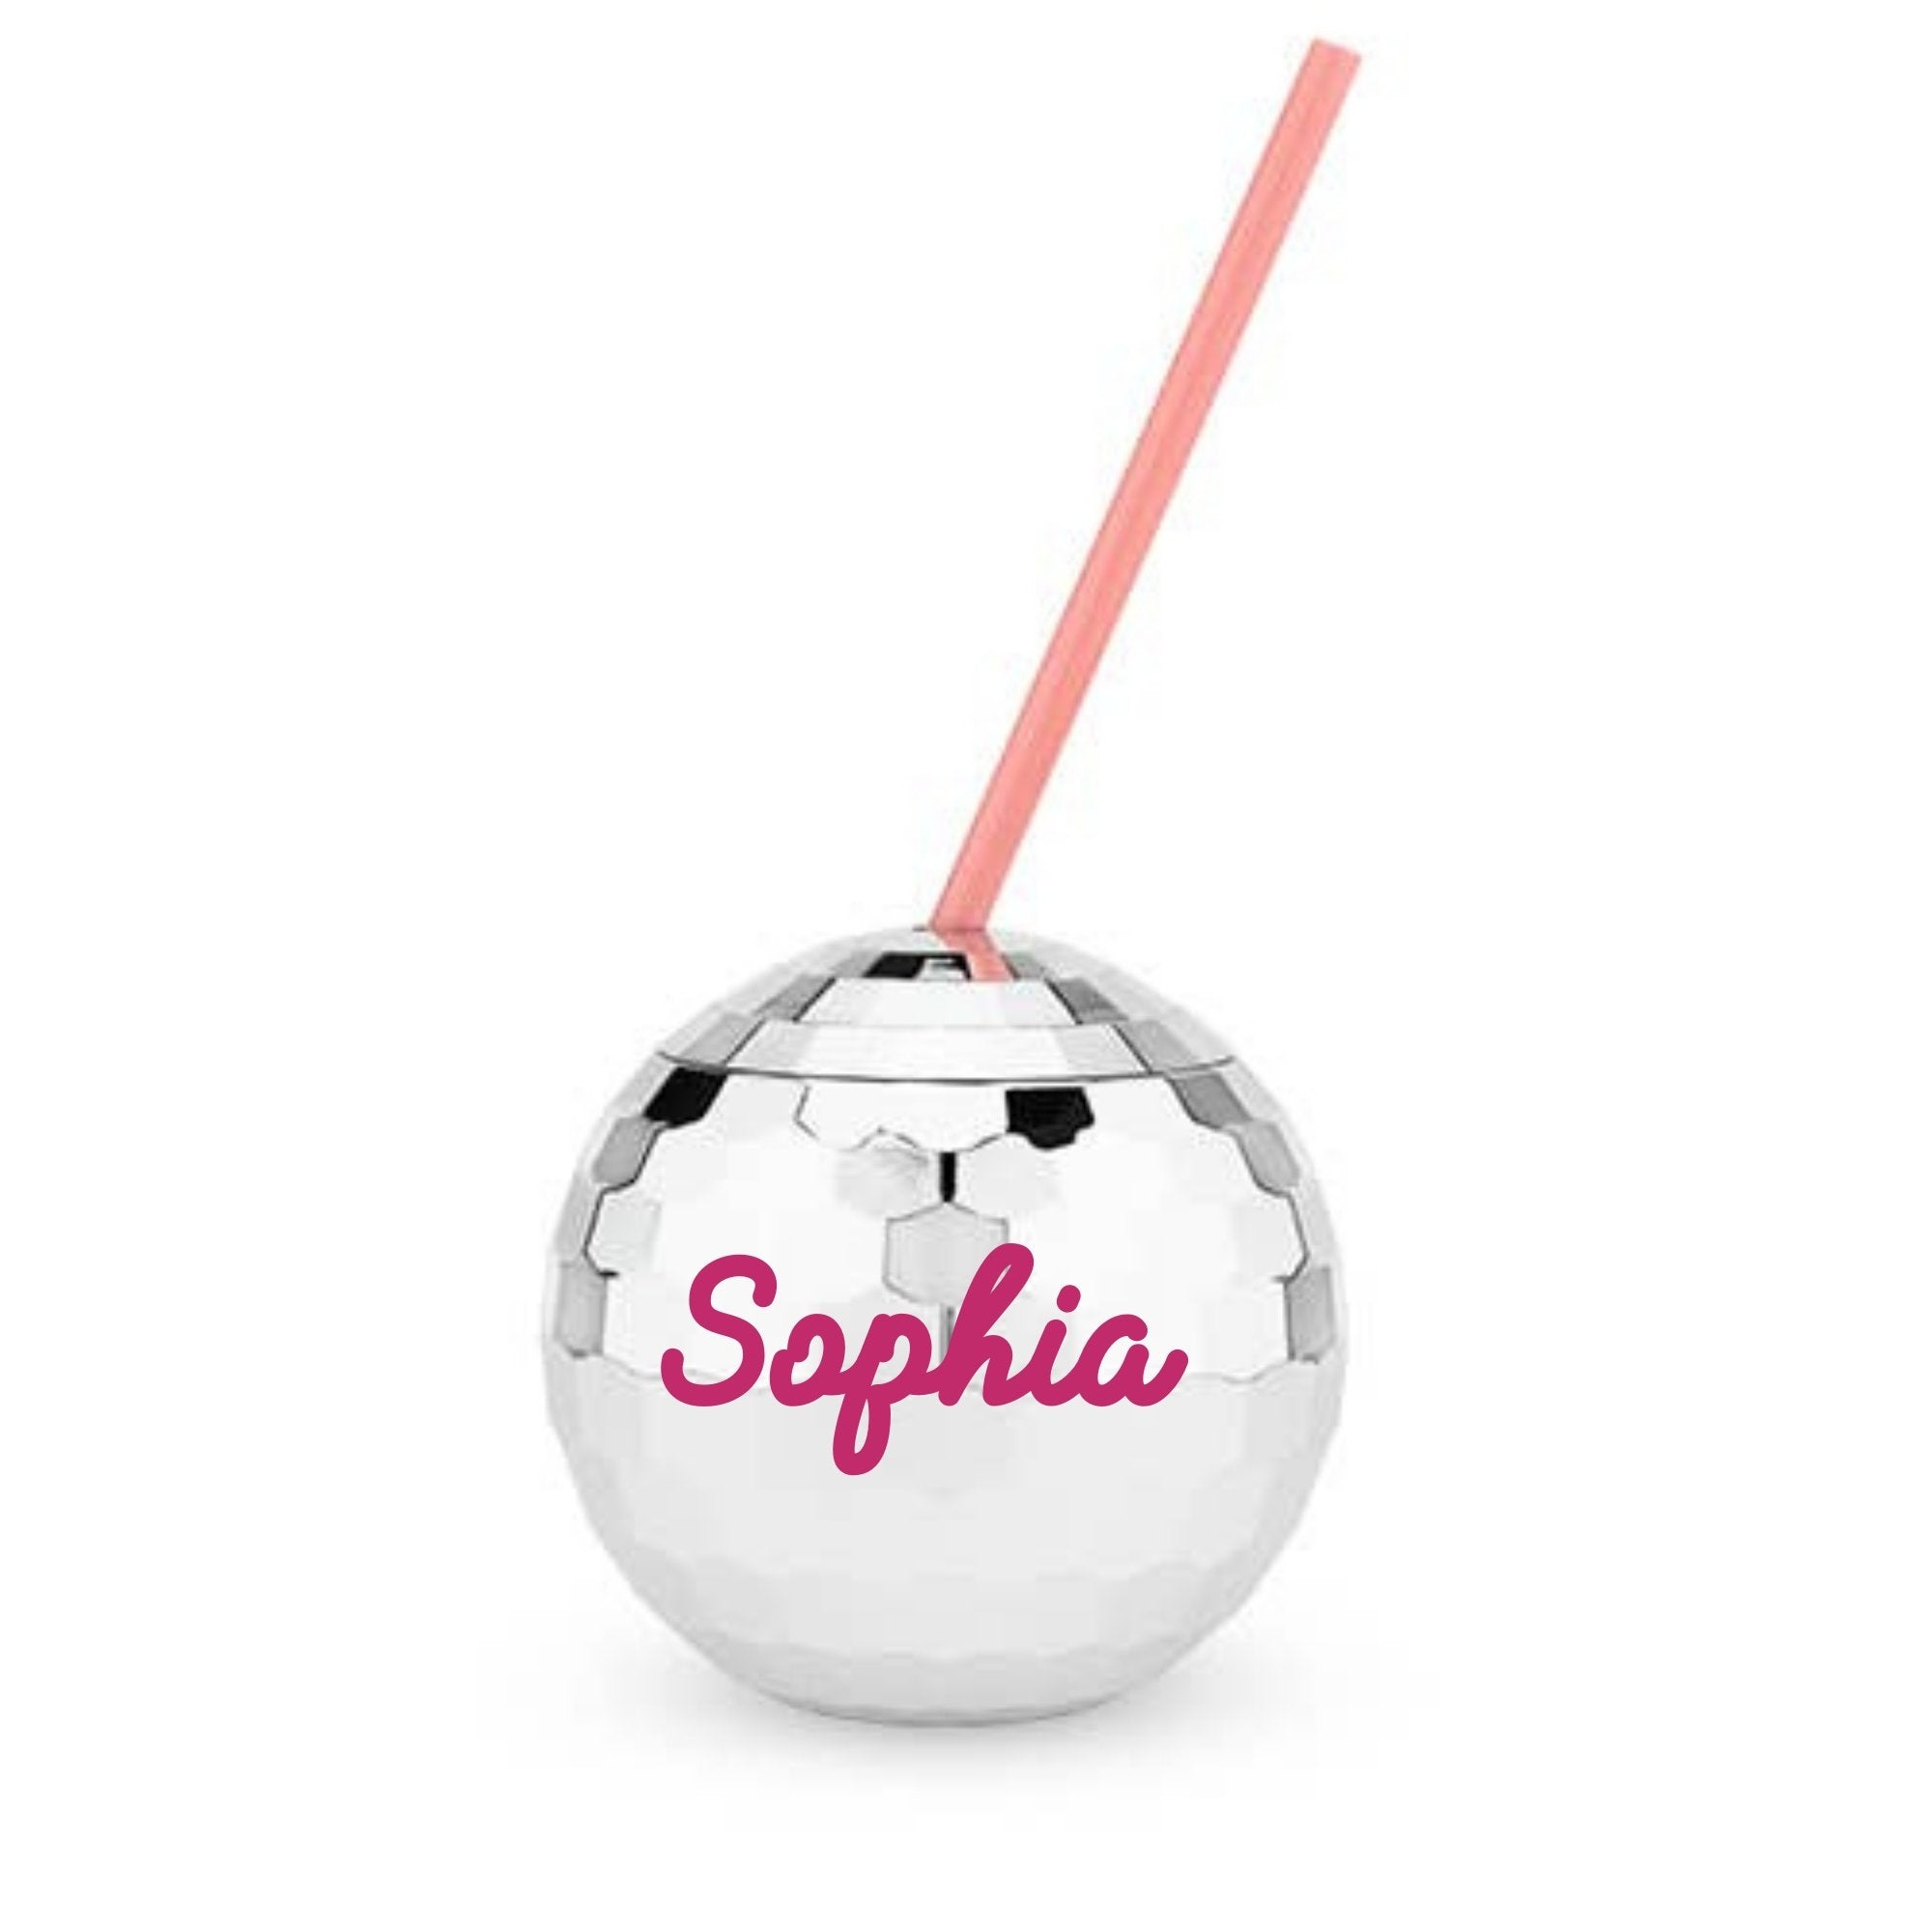 A silver disco ball tumbler that reads "Sophia" in pink script